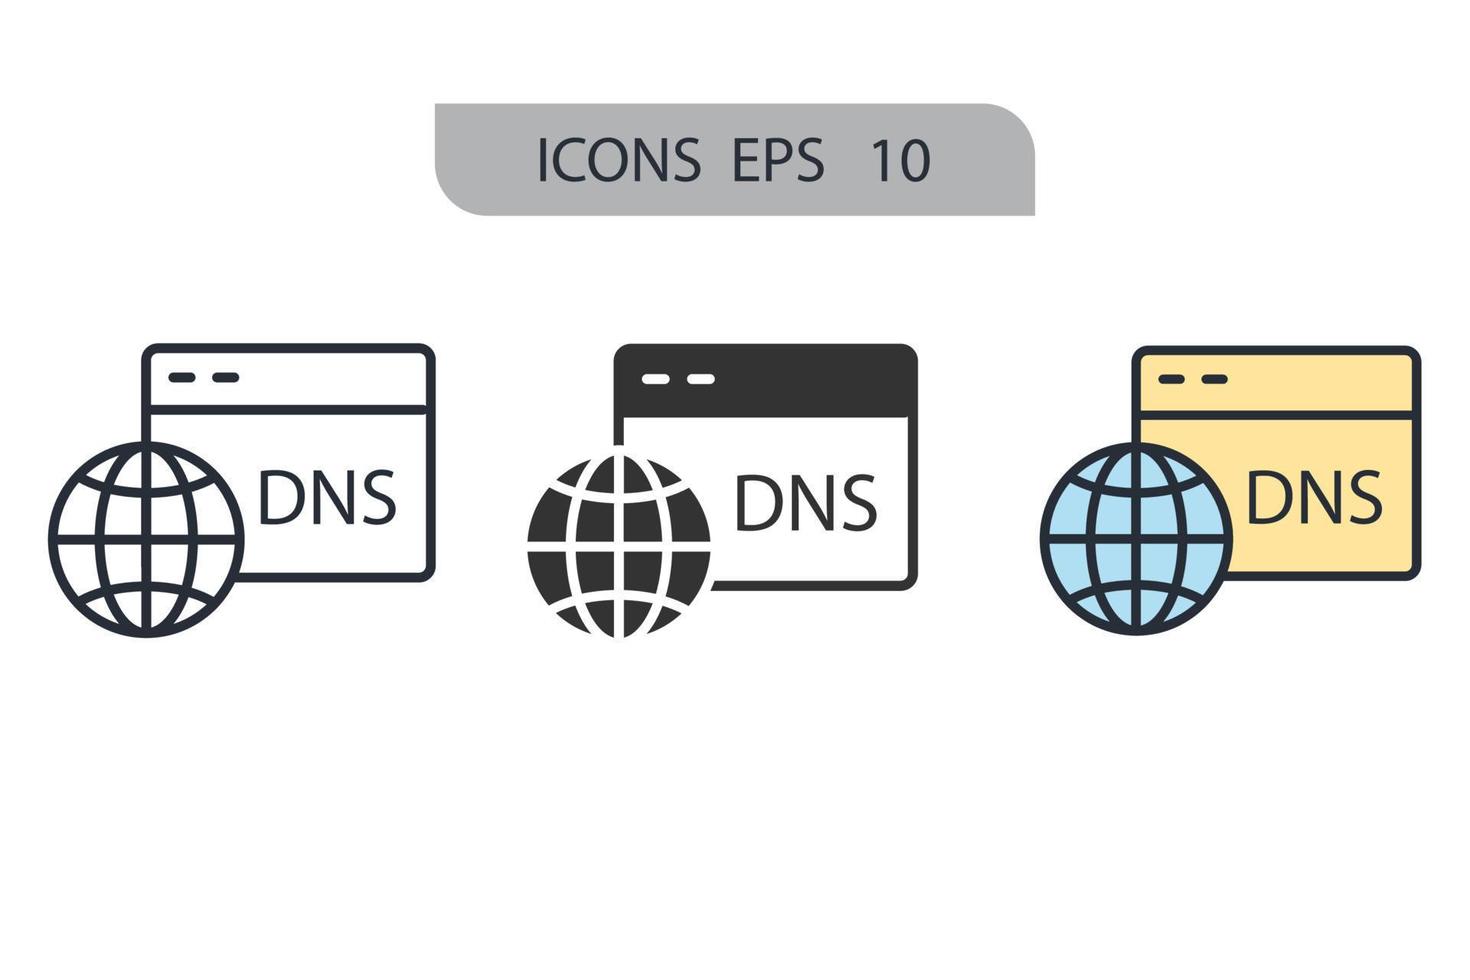 elementos de vetor de símbolo de ícones de DNS para web infográfico